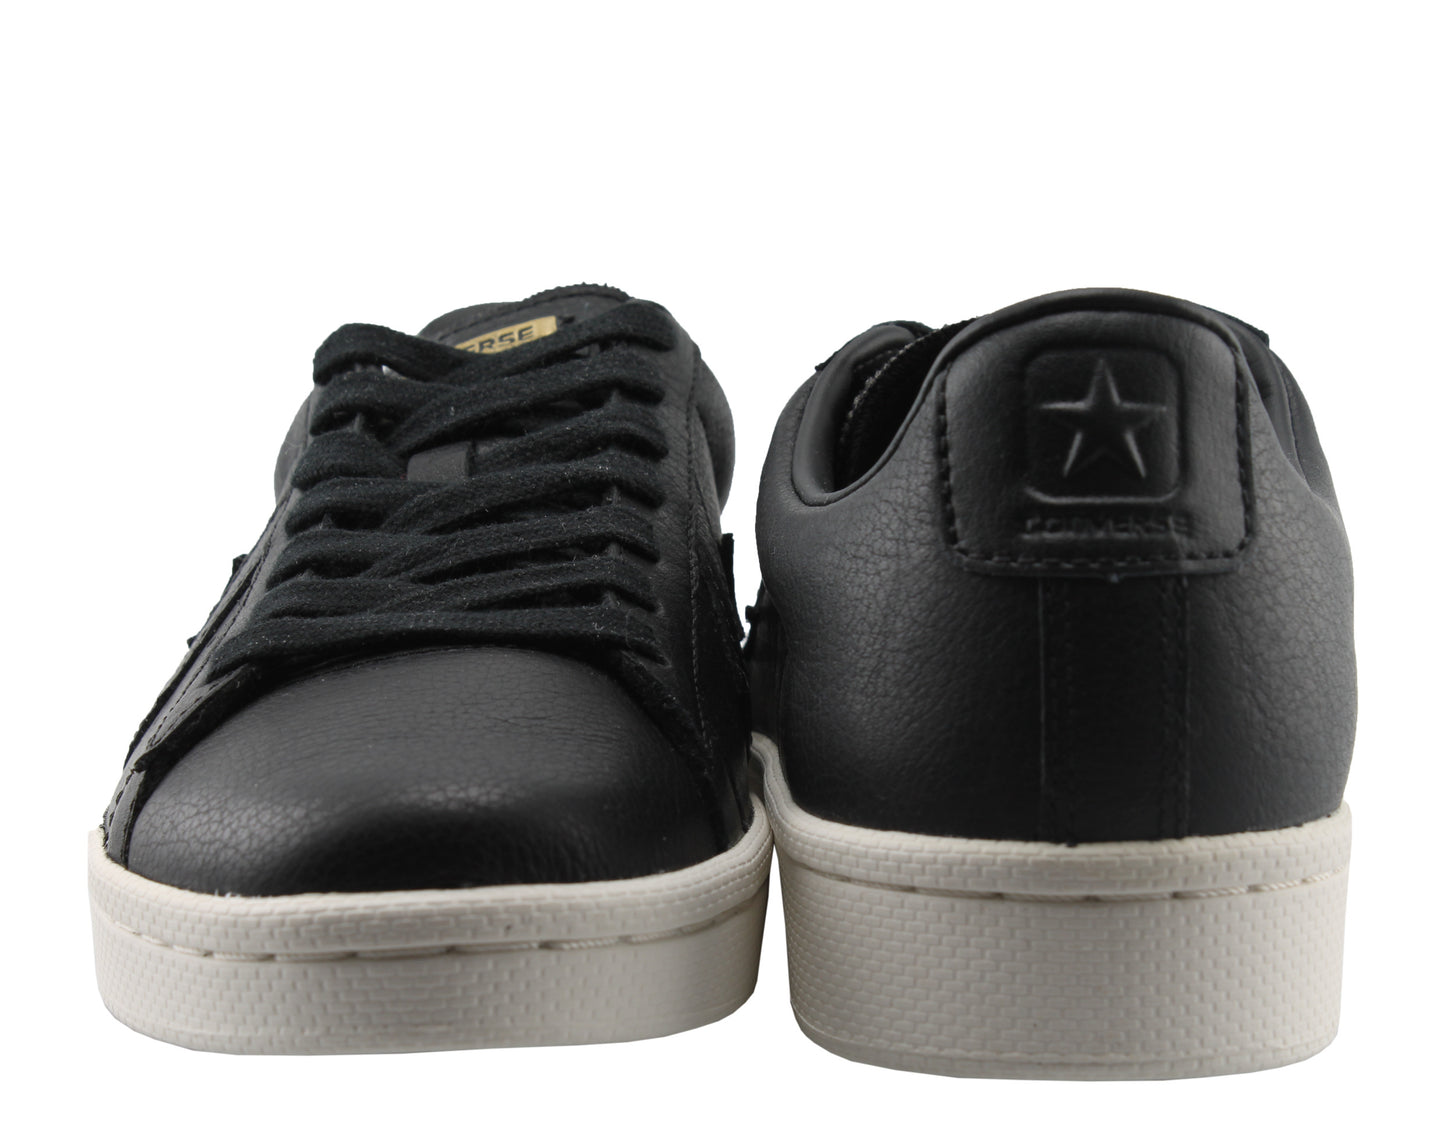 Converse CT AS Pro Leather 76 OX Black/Egret Men's Sneakers 157729C